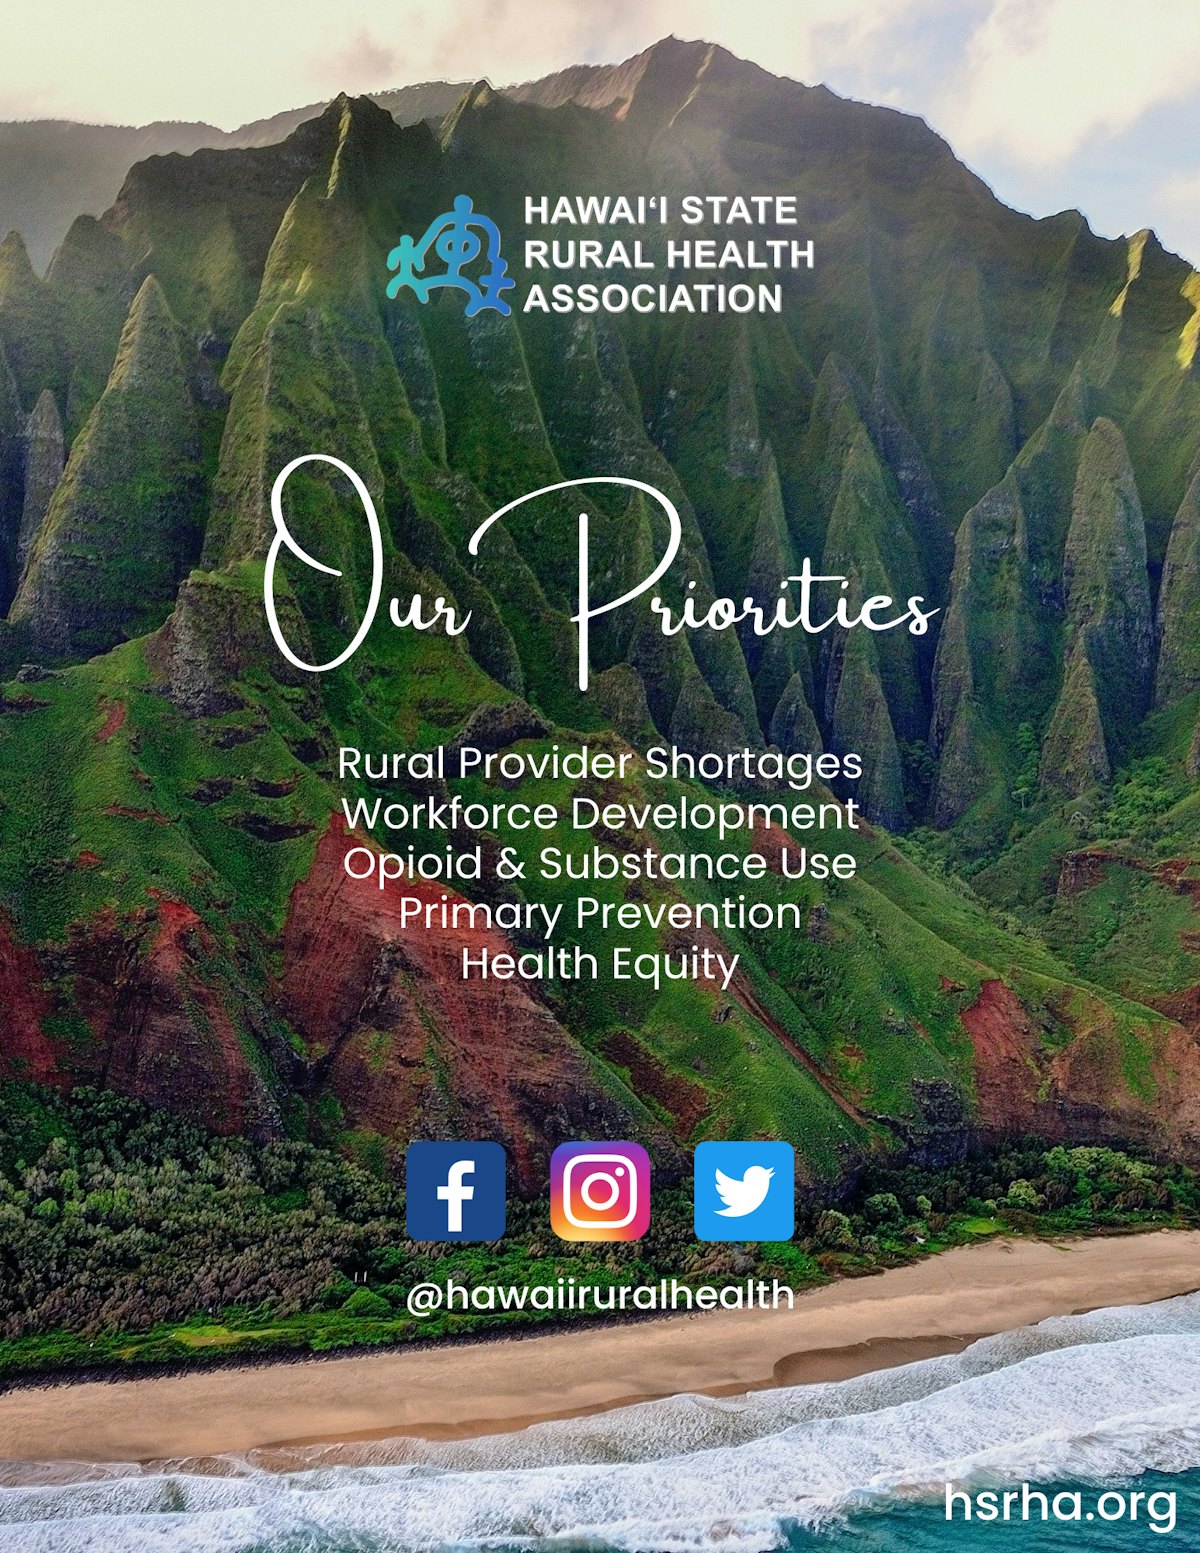 Hawaii State Rural Health Association